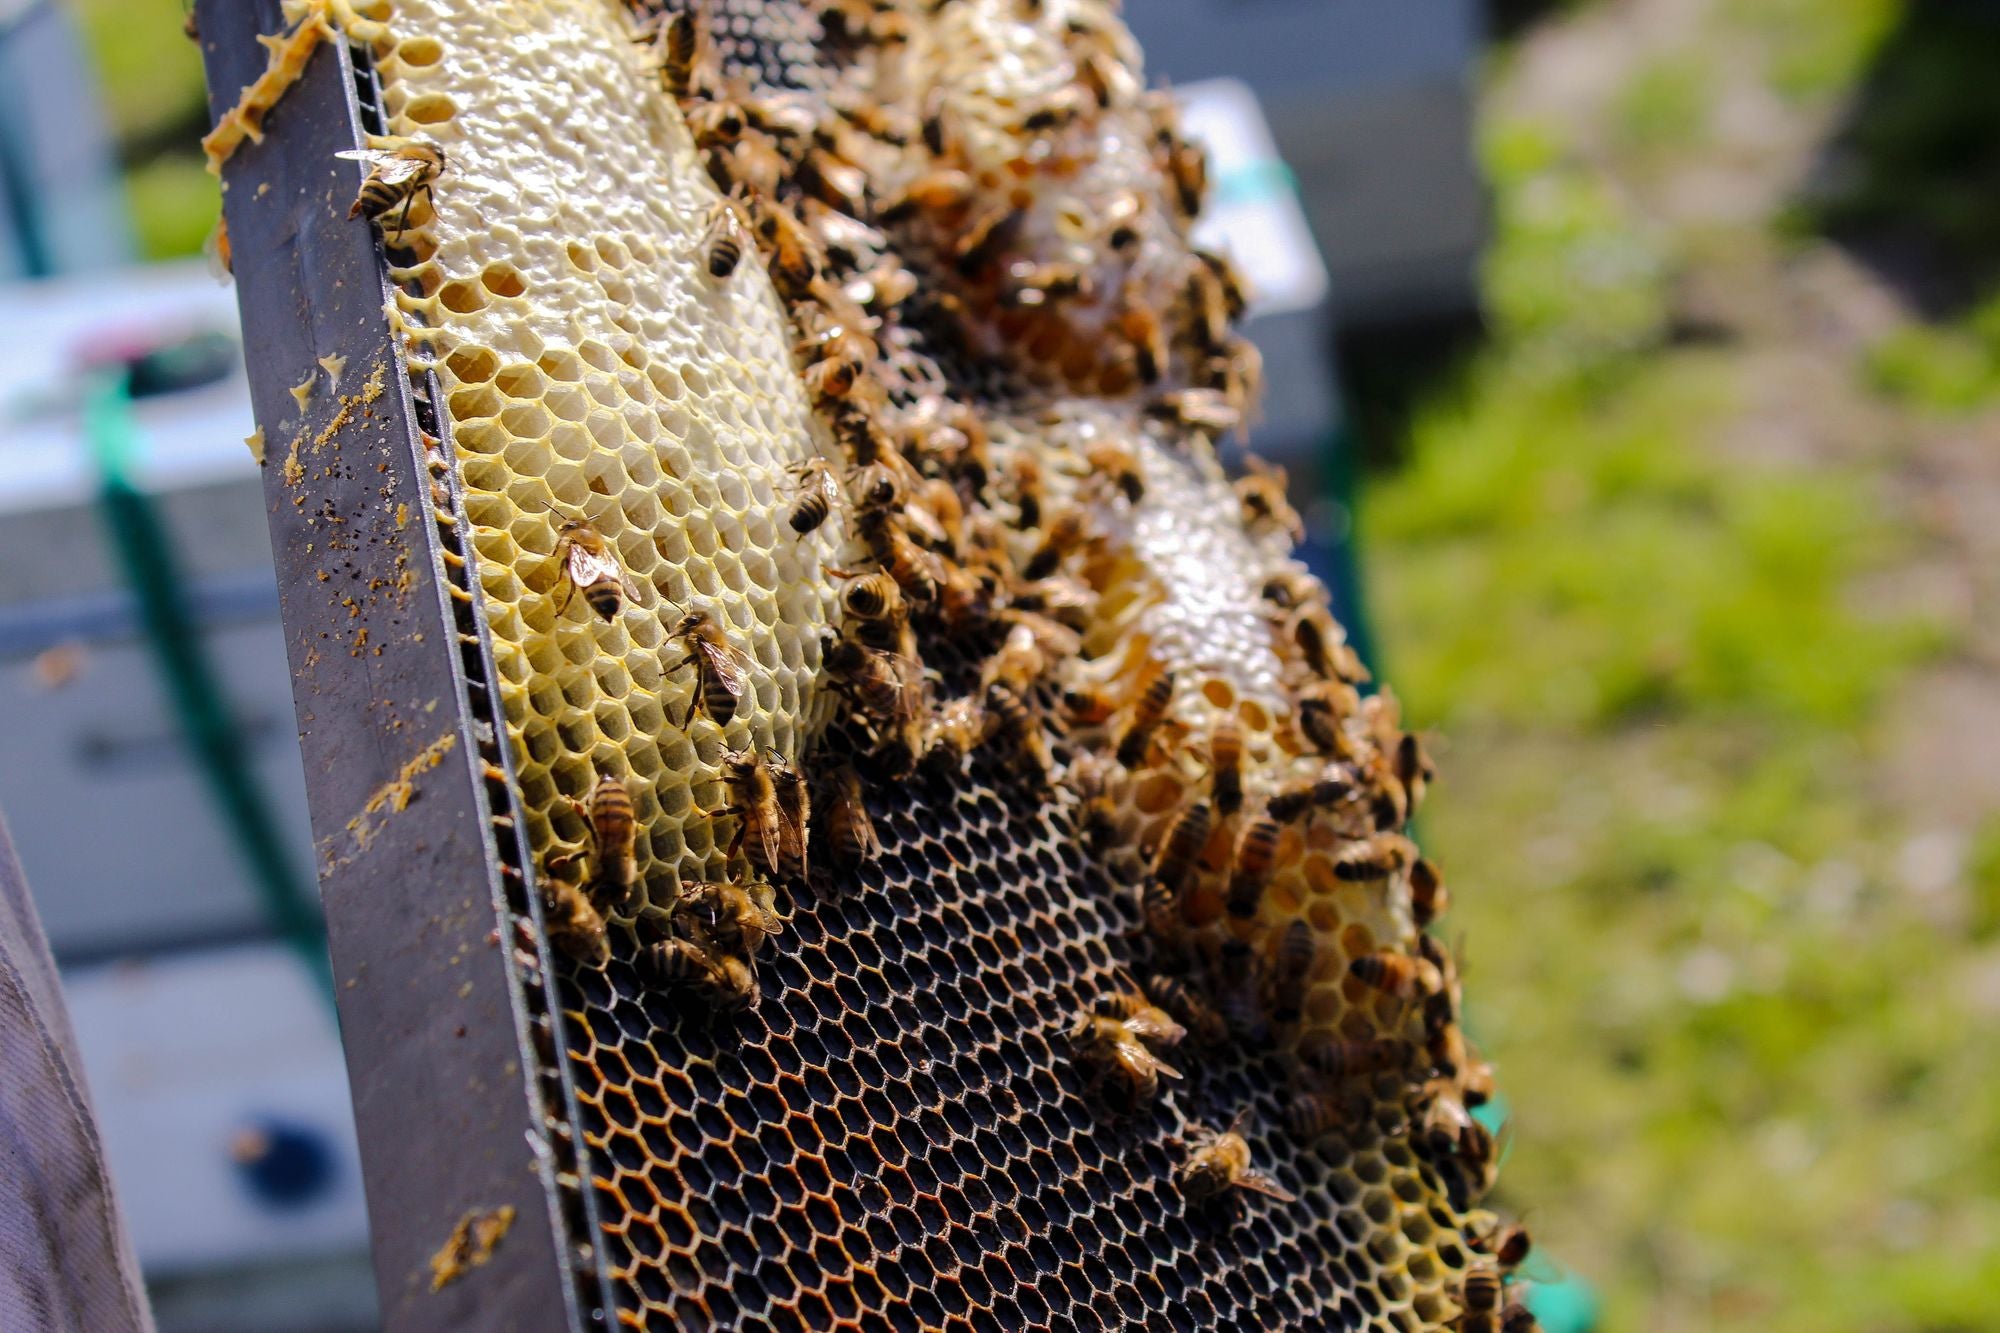 Common beekeeping mistakes